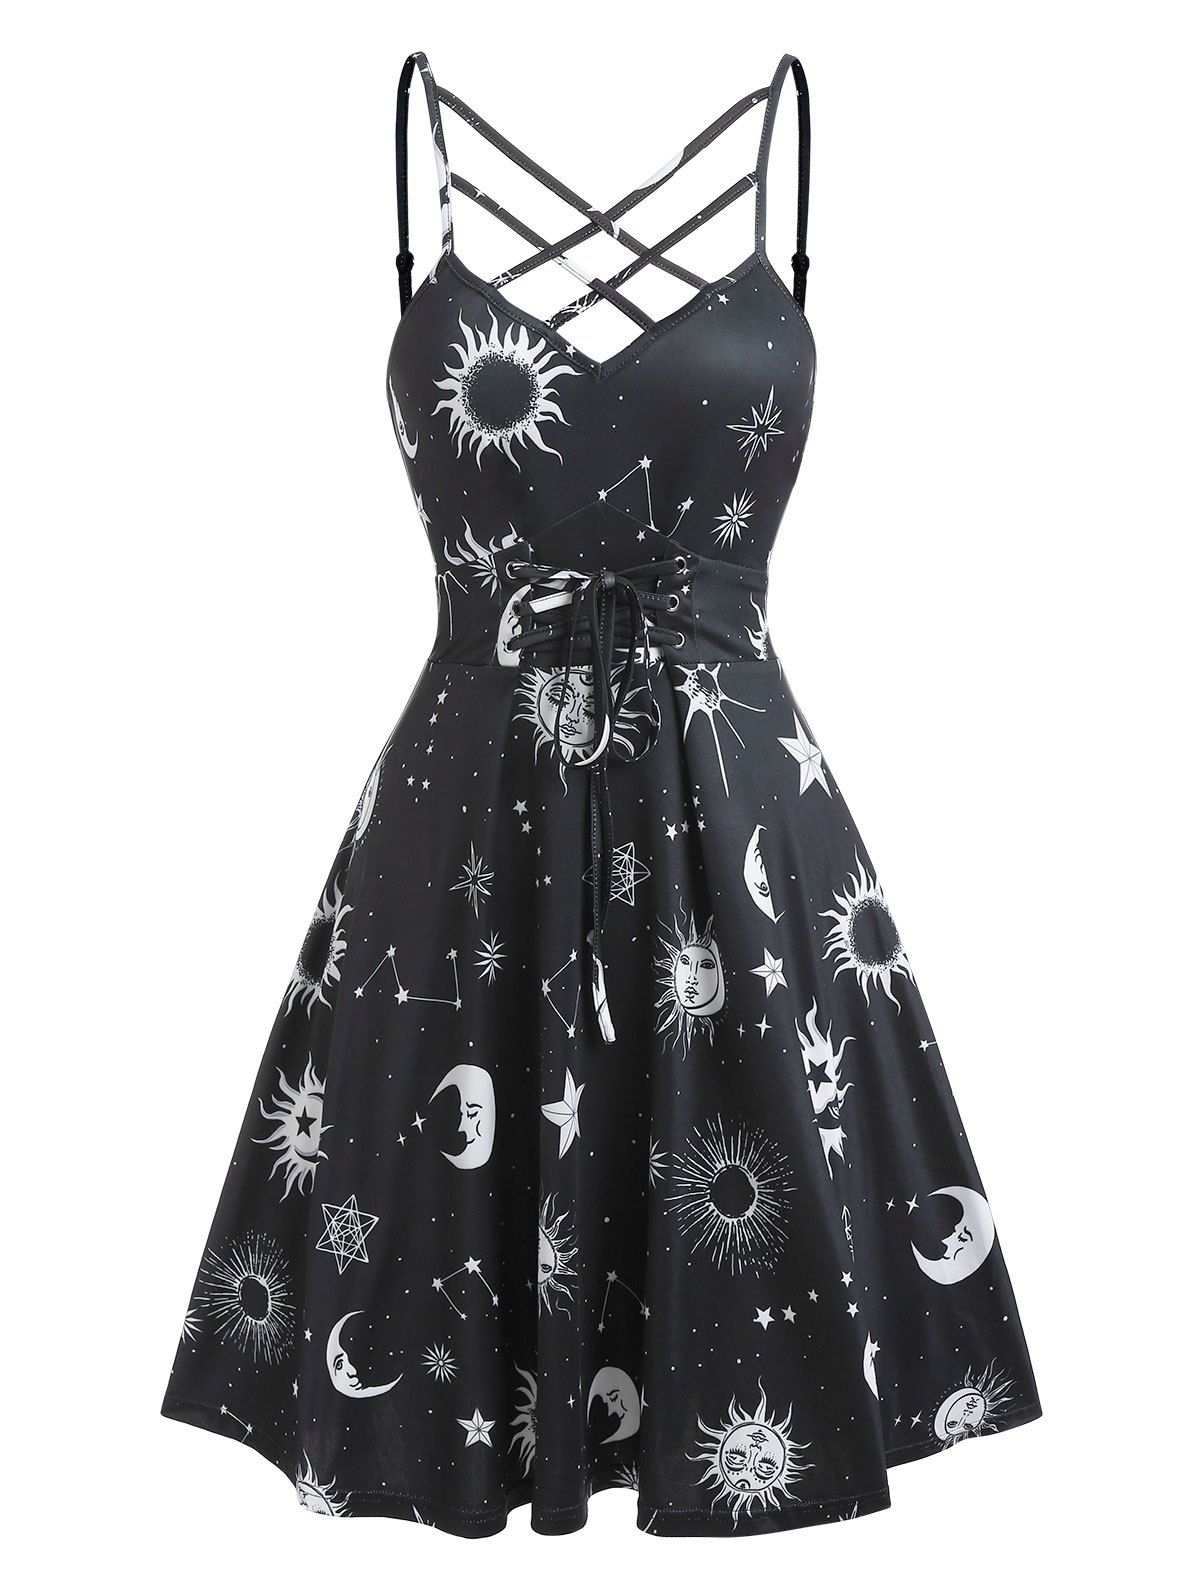 Sun Moon Print Crisscross Dress - BLACK M